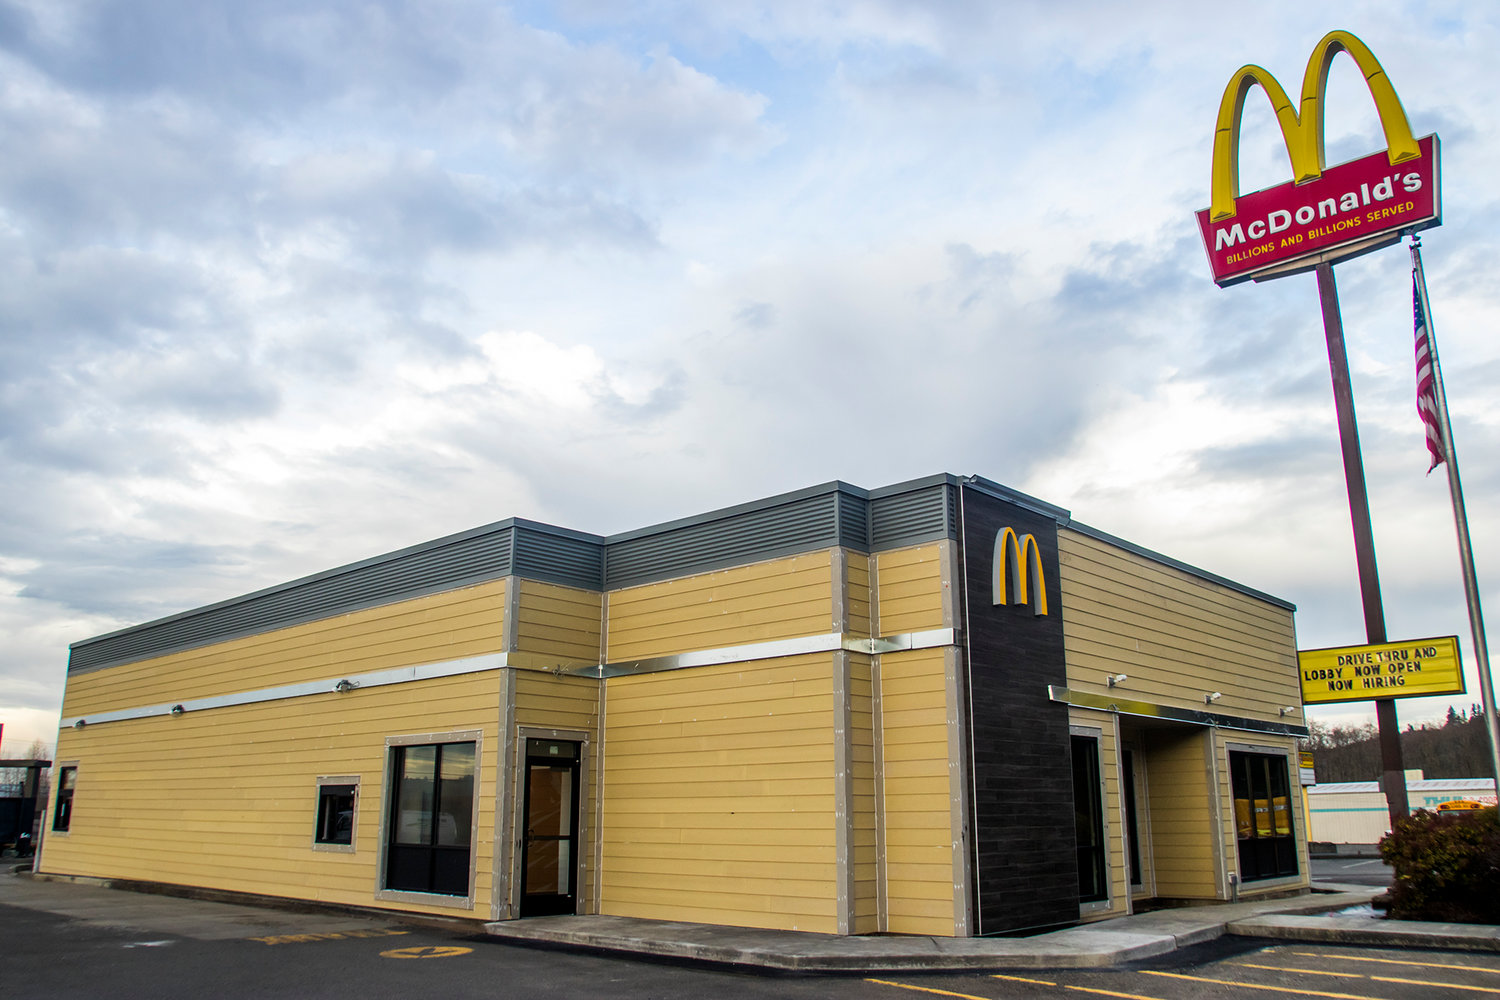 A McDonald's is located at 15 NE Median St. in Chehalis along NE Kresky Avenue.